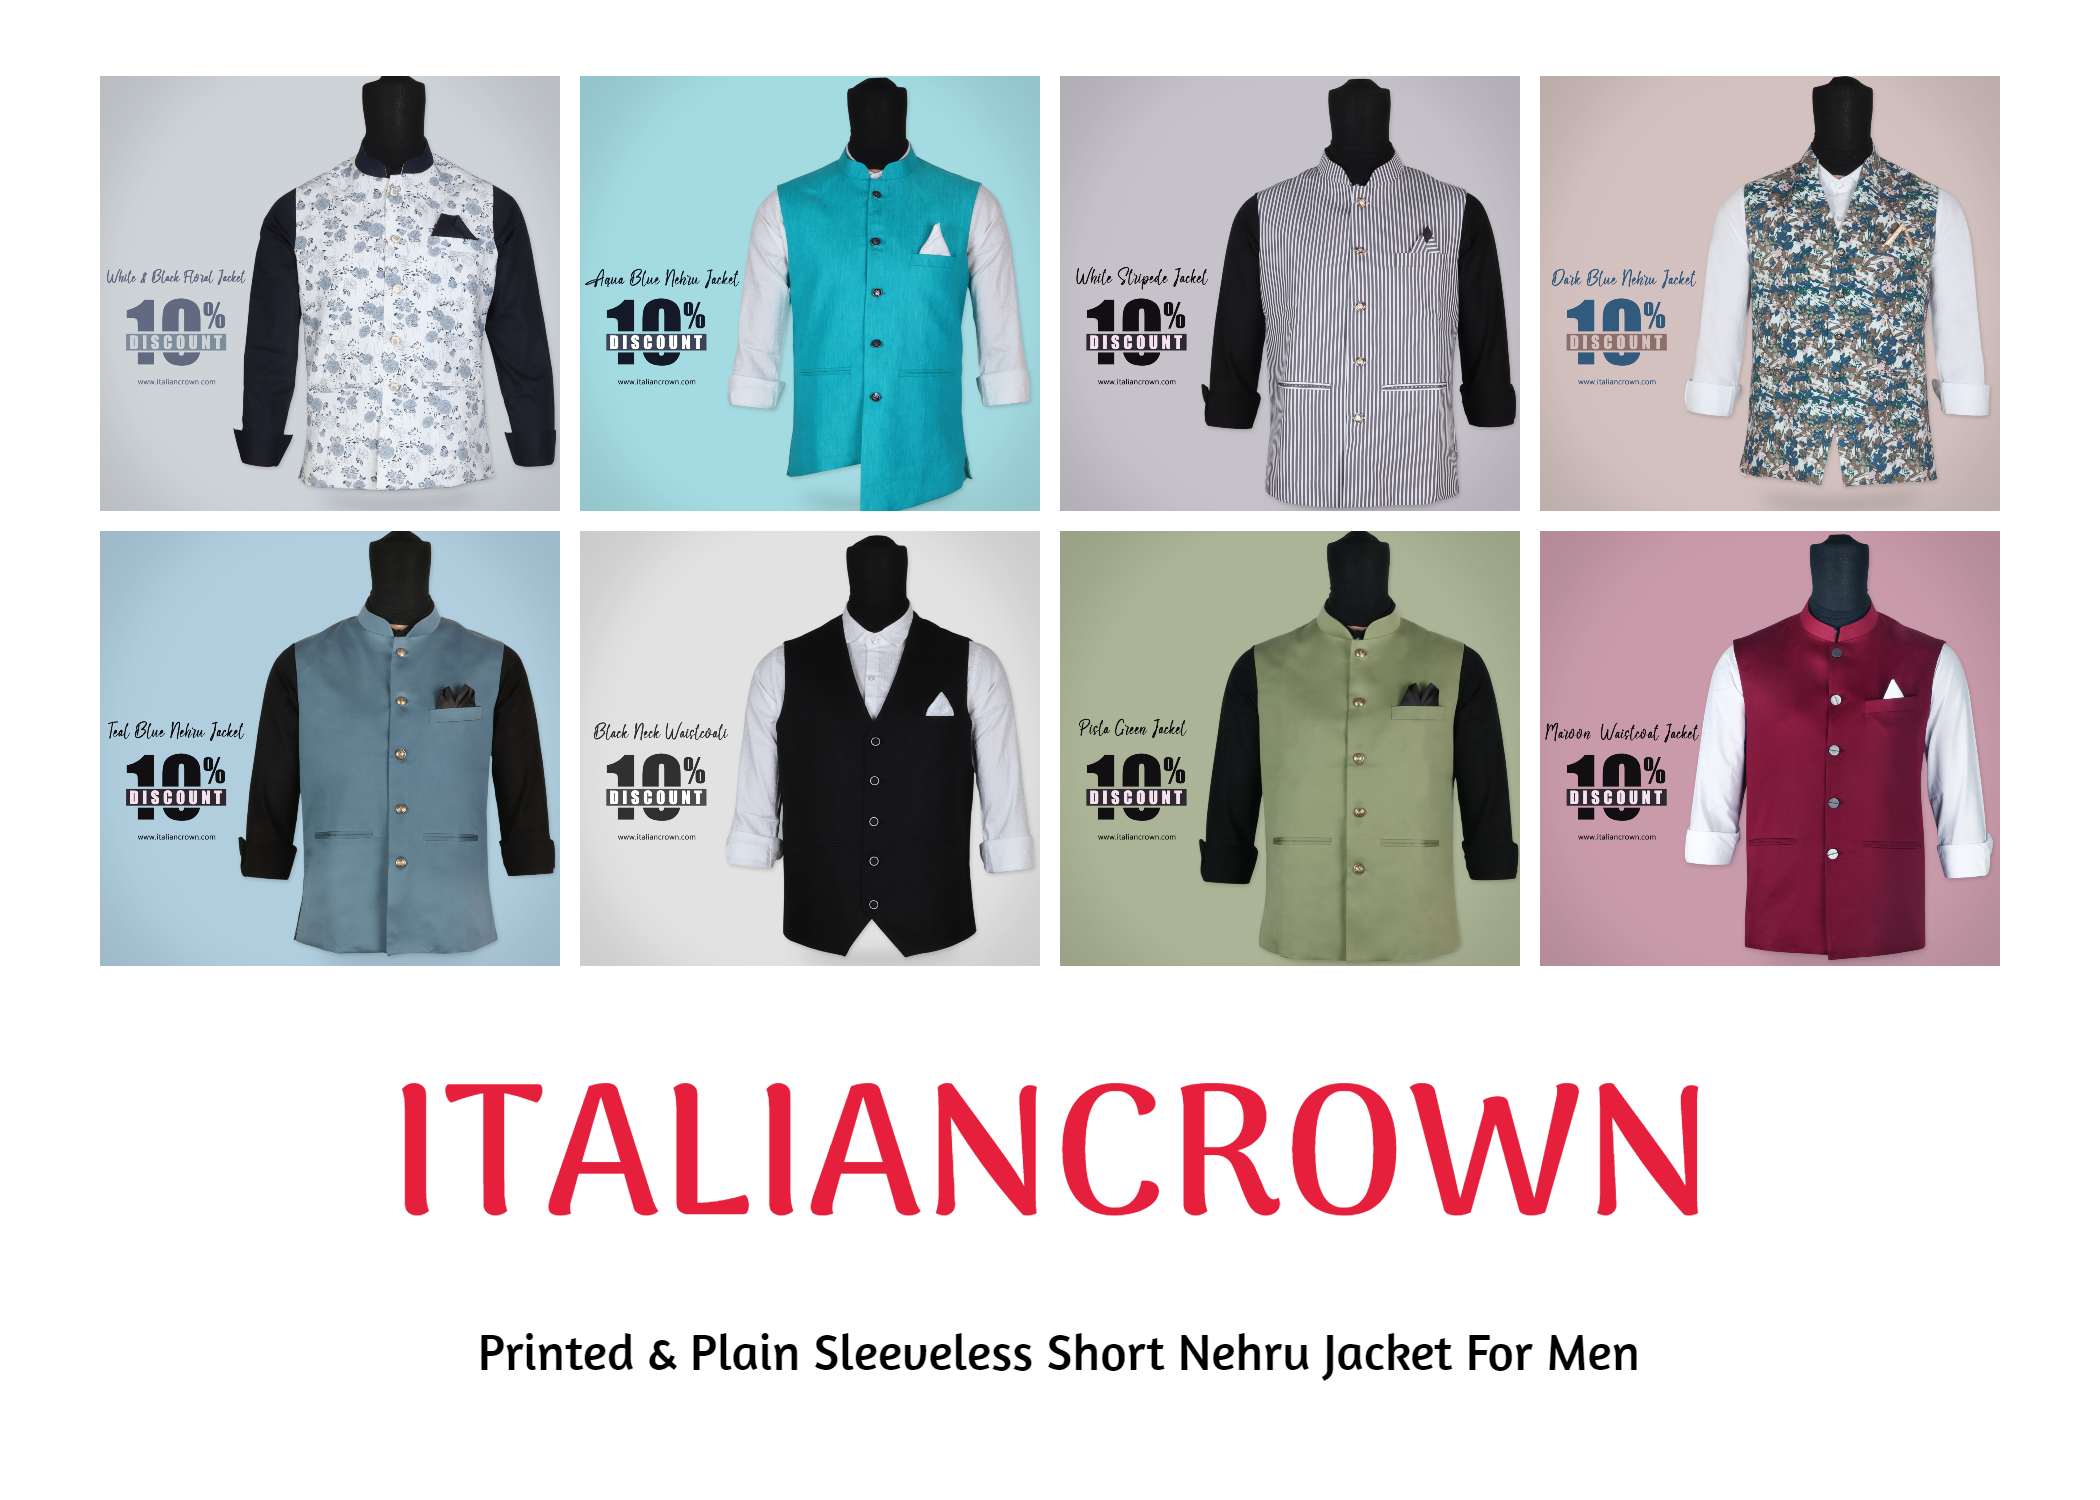 Printed & Plain Sleeveless Short Nehru Jacket For Men â€“ ItaliancrownBuy and SellClothingSouth DelhiAshram